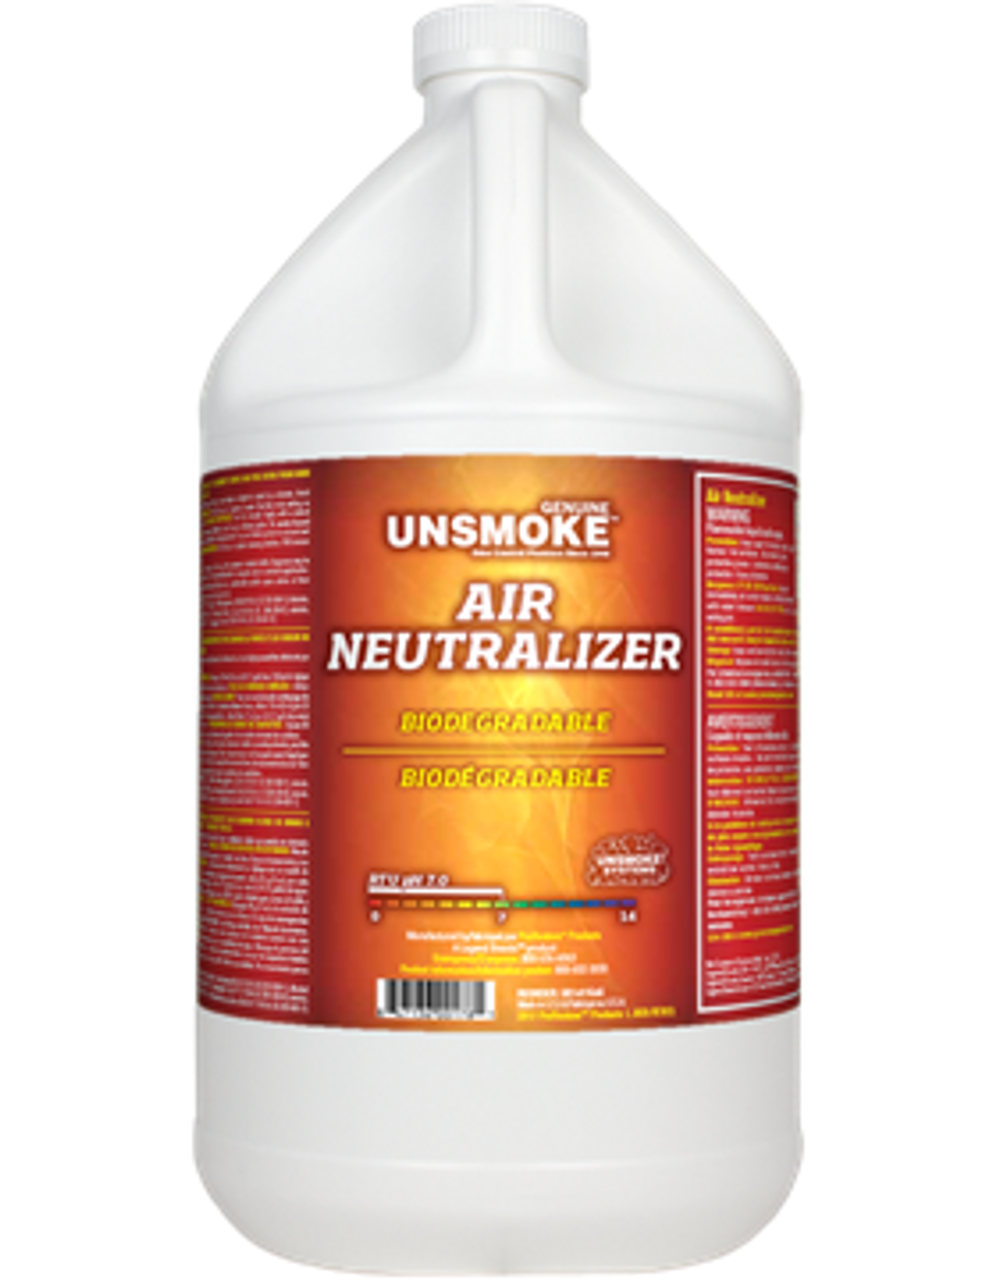 Unsmoke Air Neutralizer Biodegradable - 1gal - CASE of 4ea